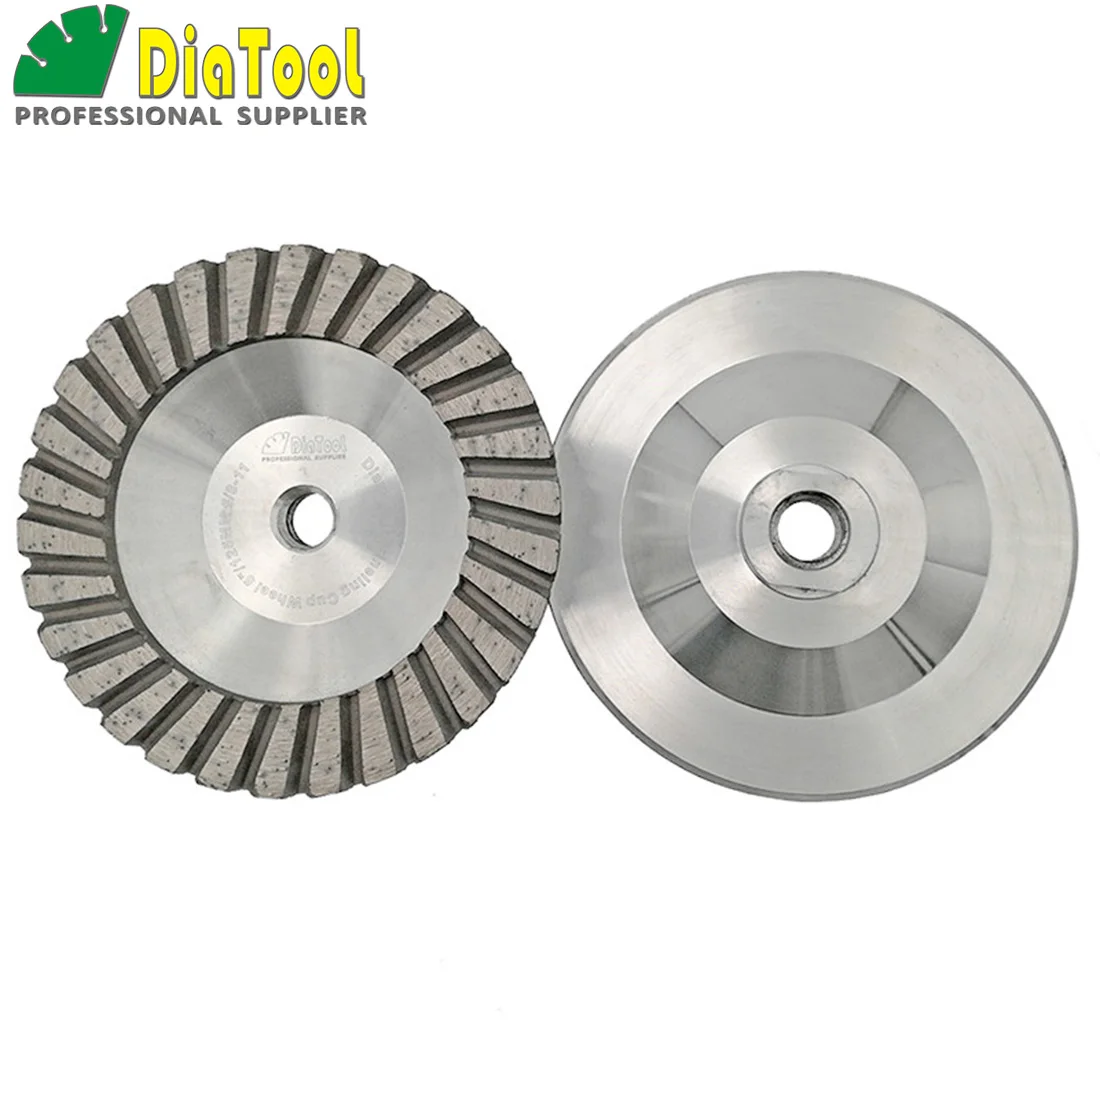 DIATOOL 2PK Dia 125mm/5inch Aluminum Based Diamond Grinding Cup Wheel 5/8-11 thread Grit #30 Grinding Wheel For Granite Concrete